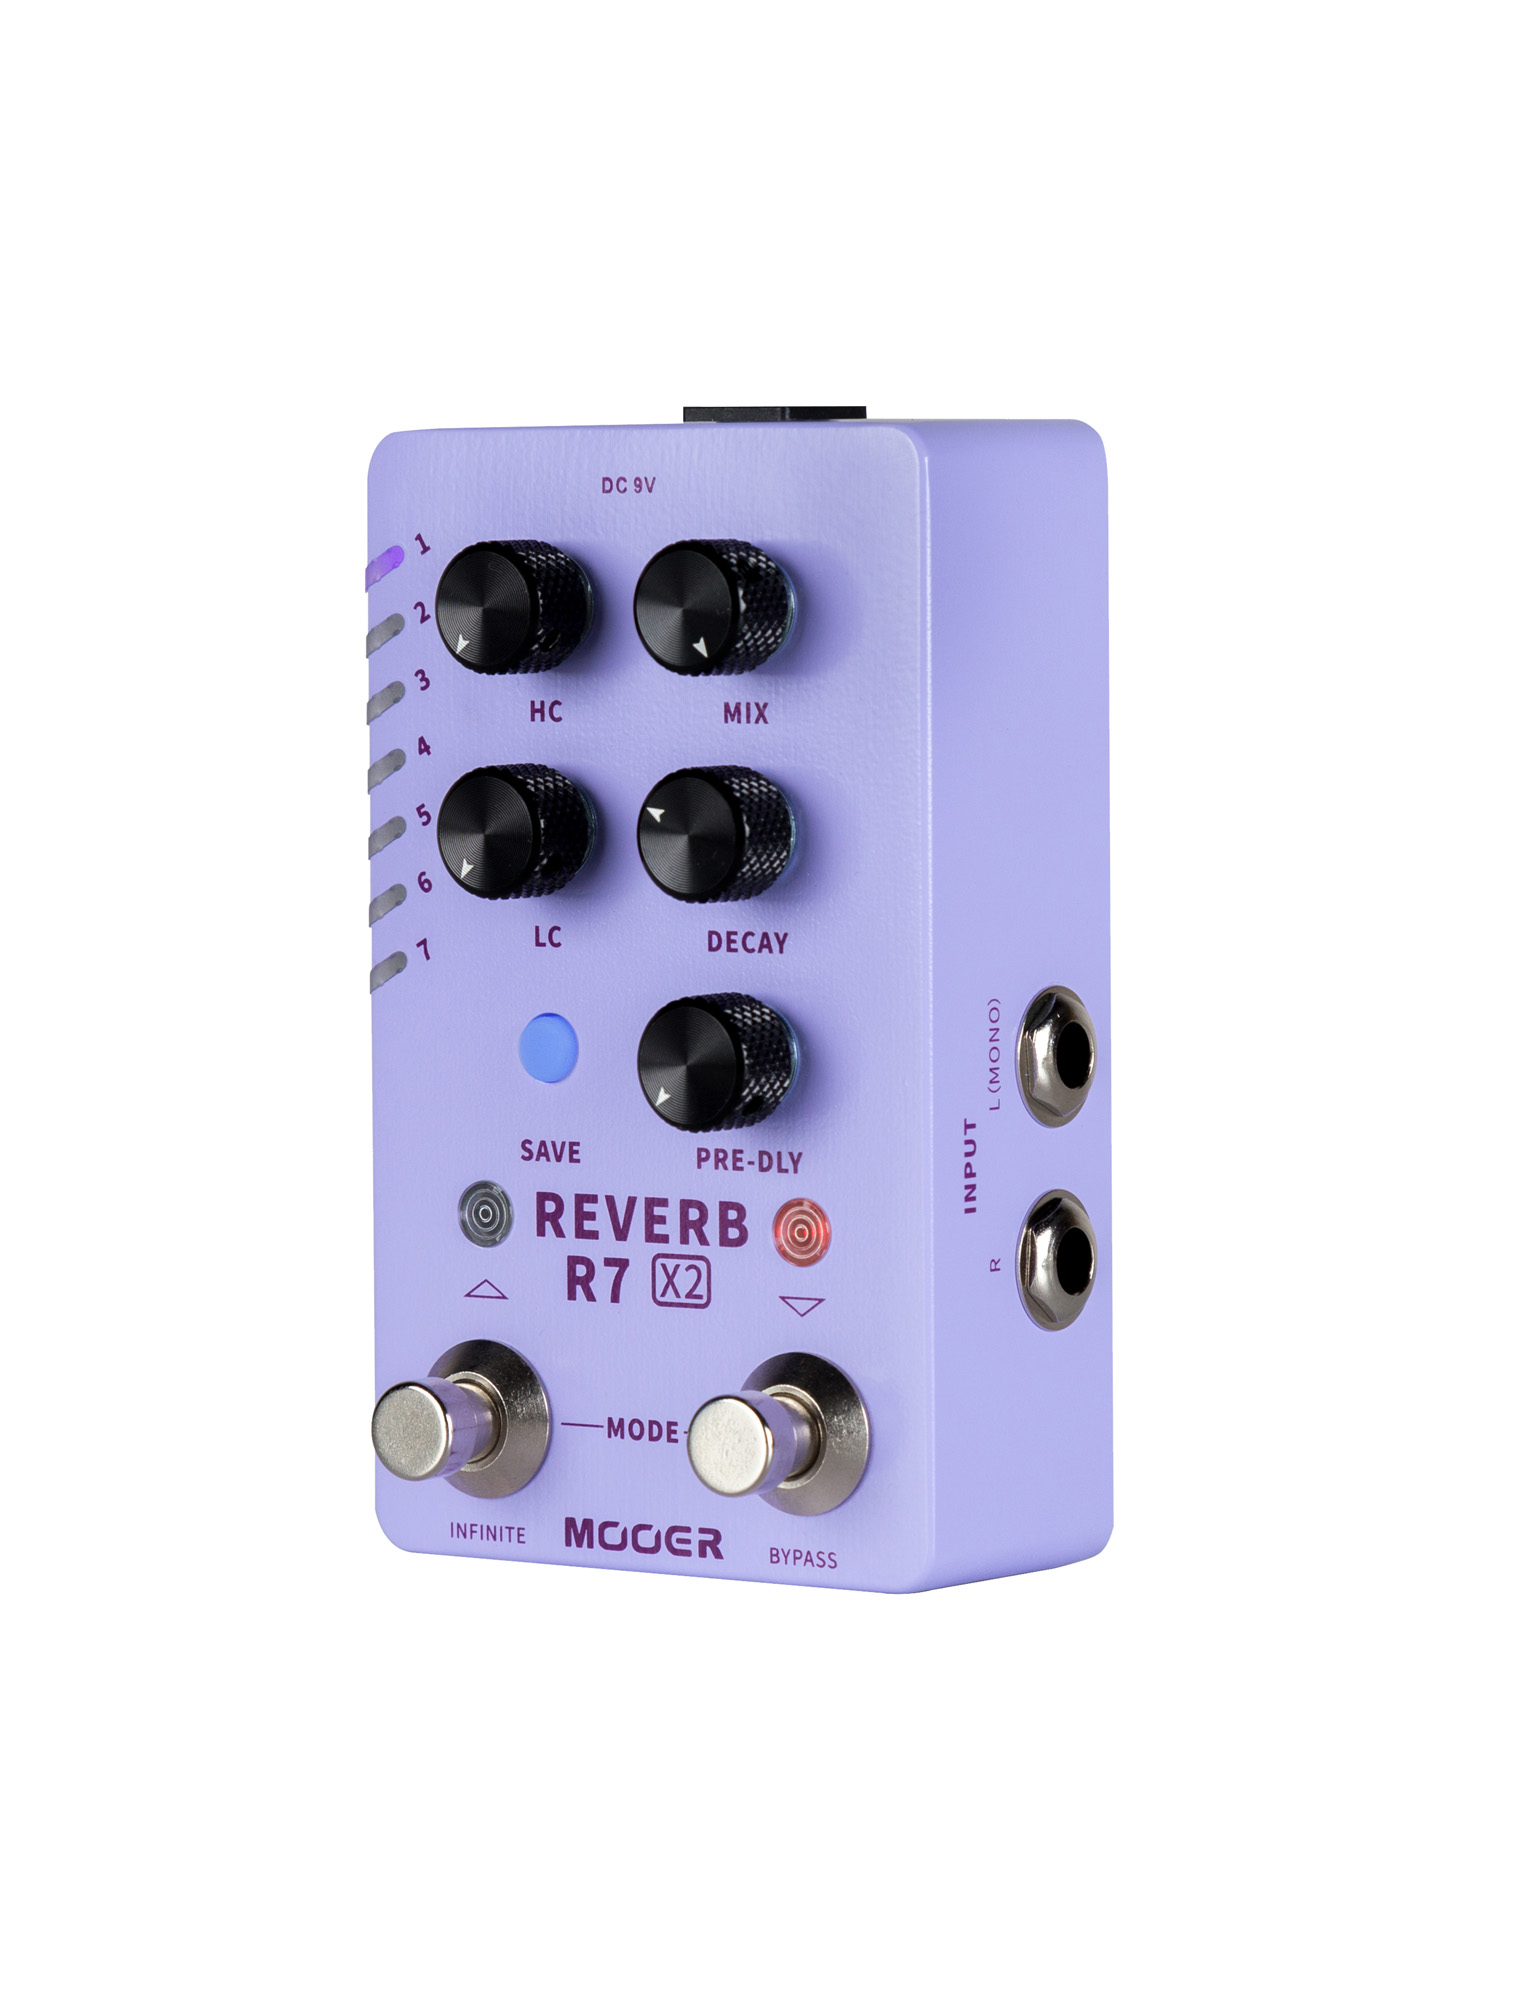 Mooer R7x2 Reverb - Reverb, delay & echo effect pedal - Variation 2